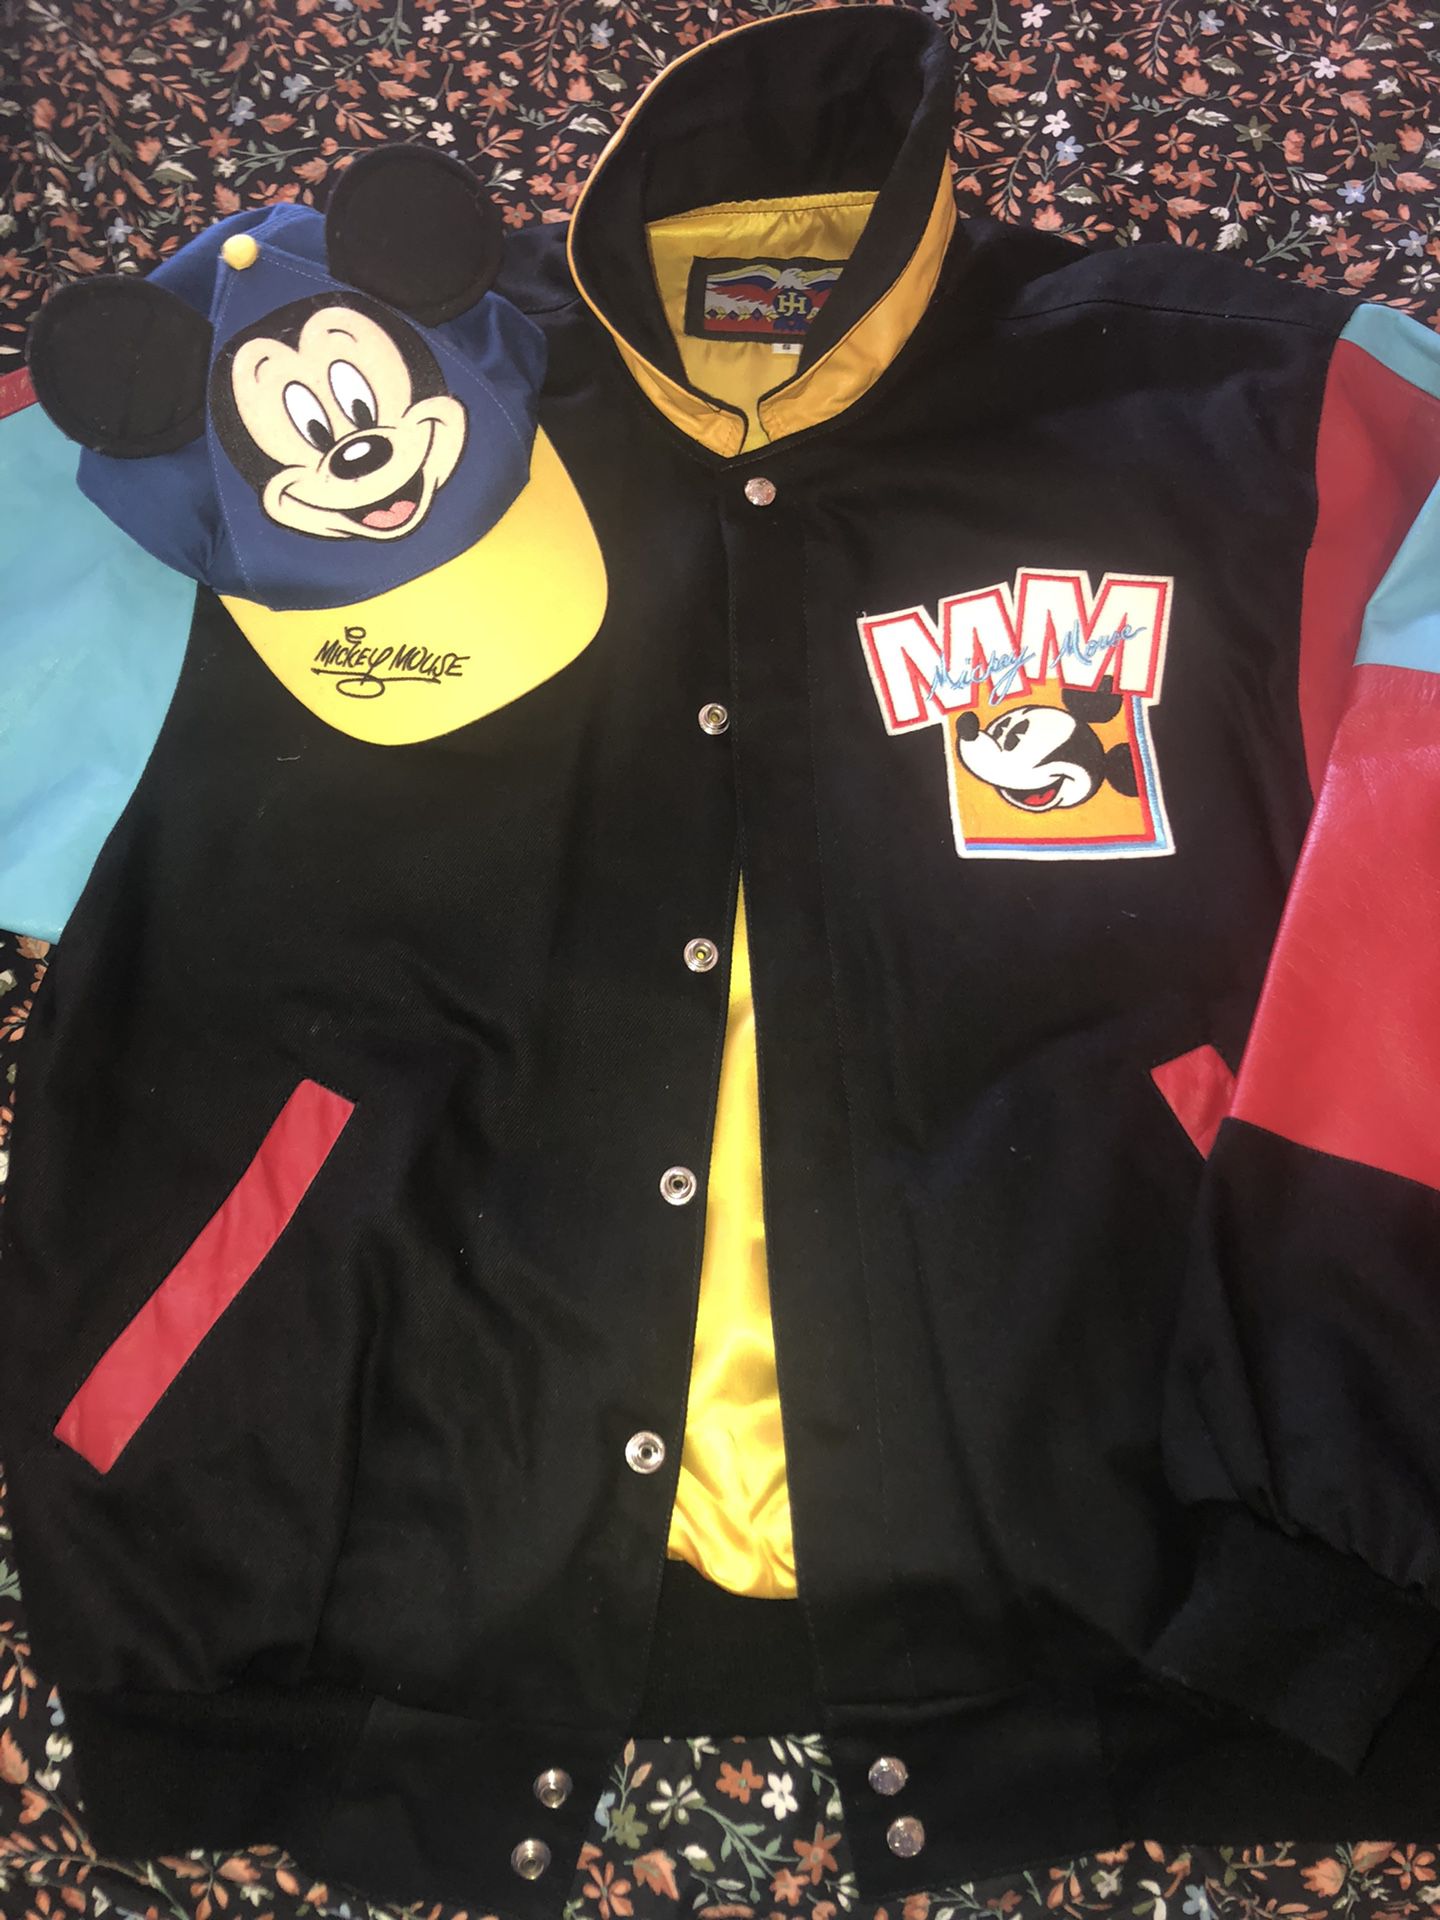 Disney x Jeff Hamilton genuine leather jacket and matching hat